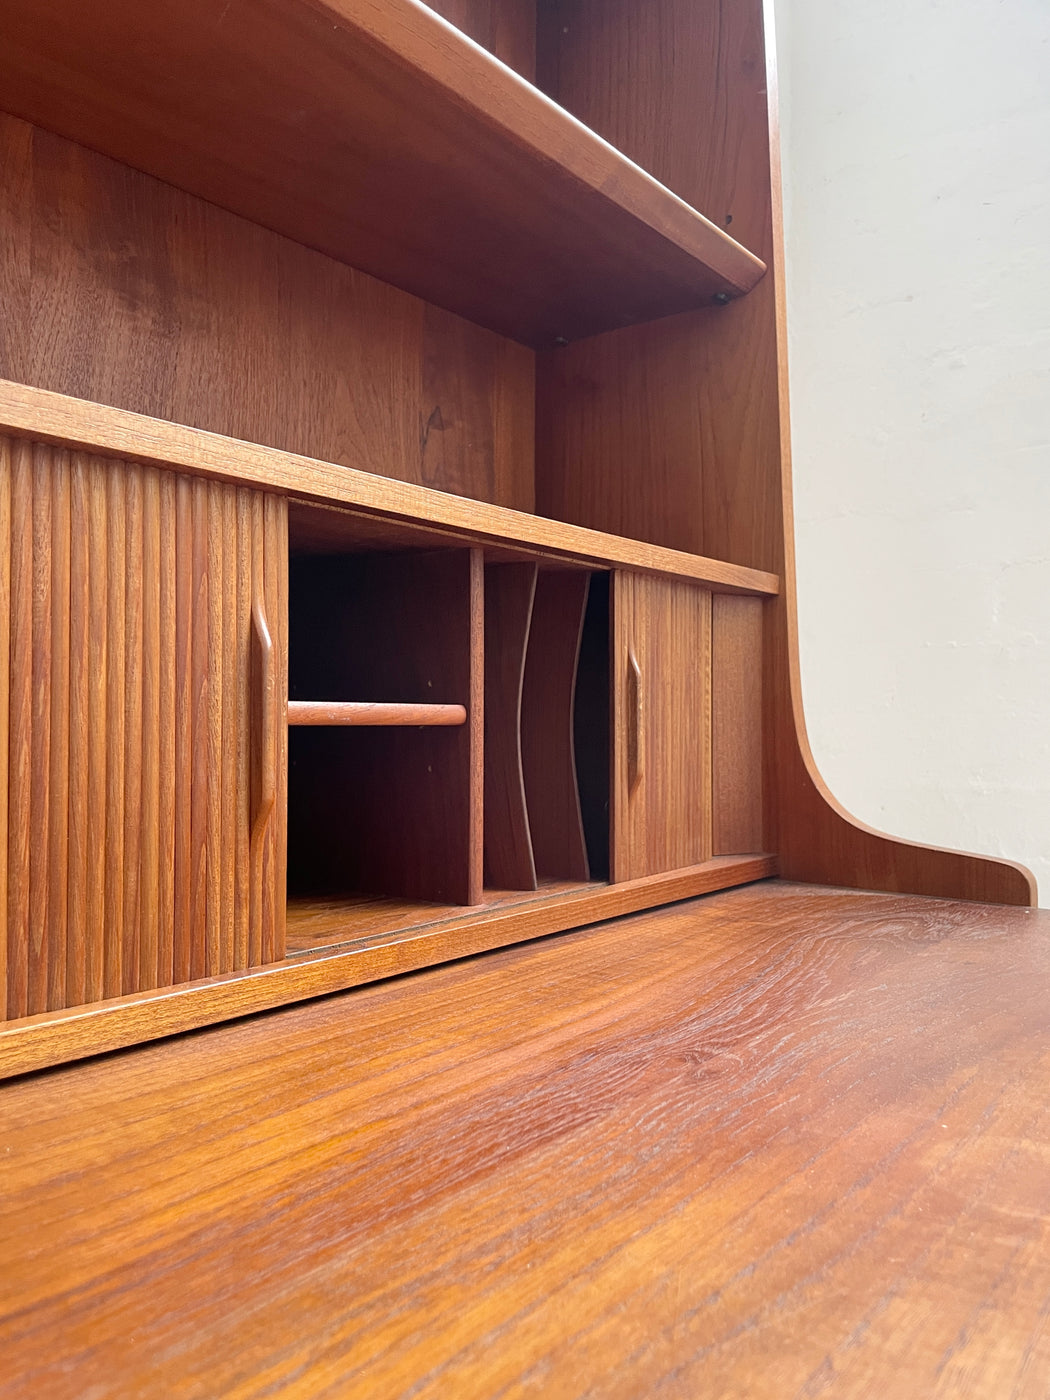 Johannes Sorth 'Bornholmer' Bureau Bookcase